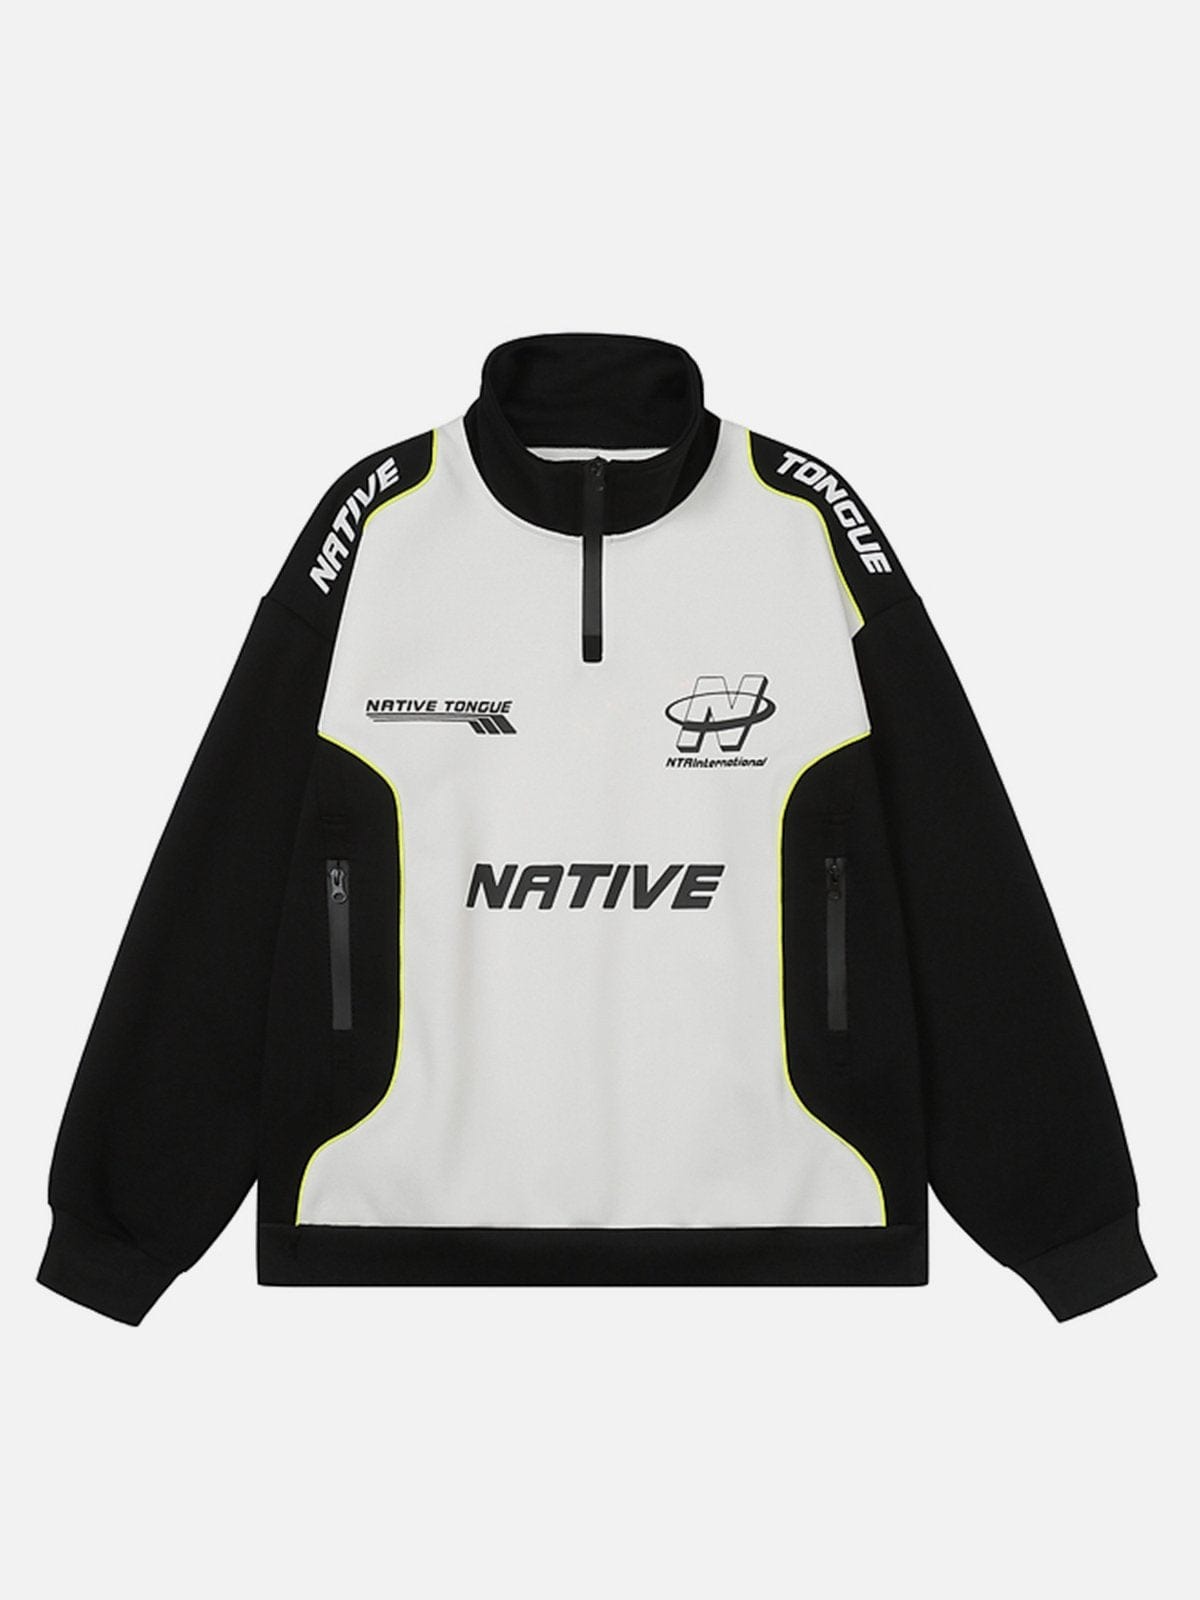 NEV Printed Color Block Racing Sweatshirt